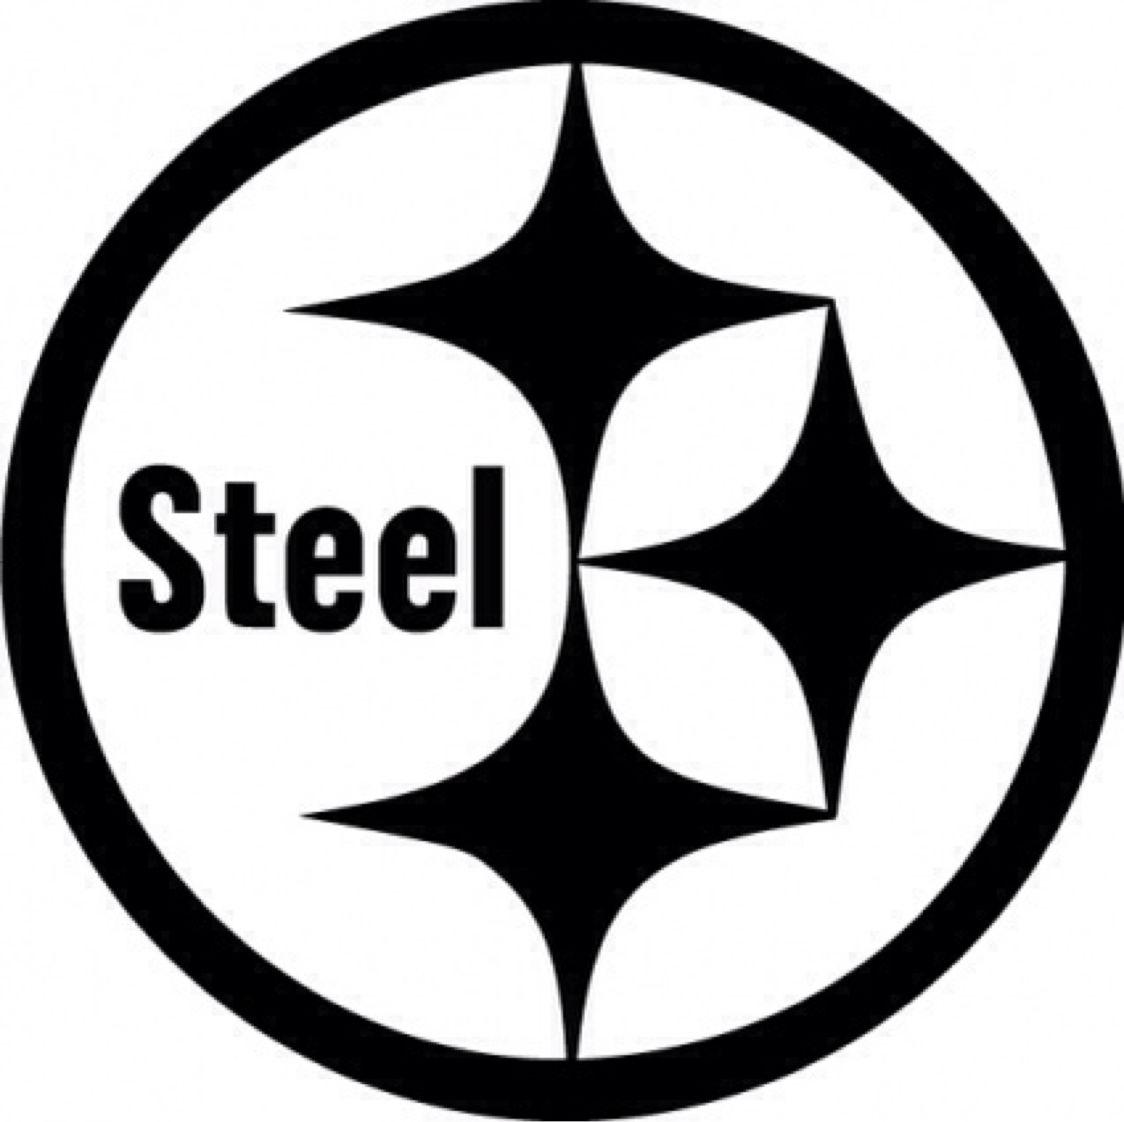 Carnegie Steel Logo - Industrial Revolution Men